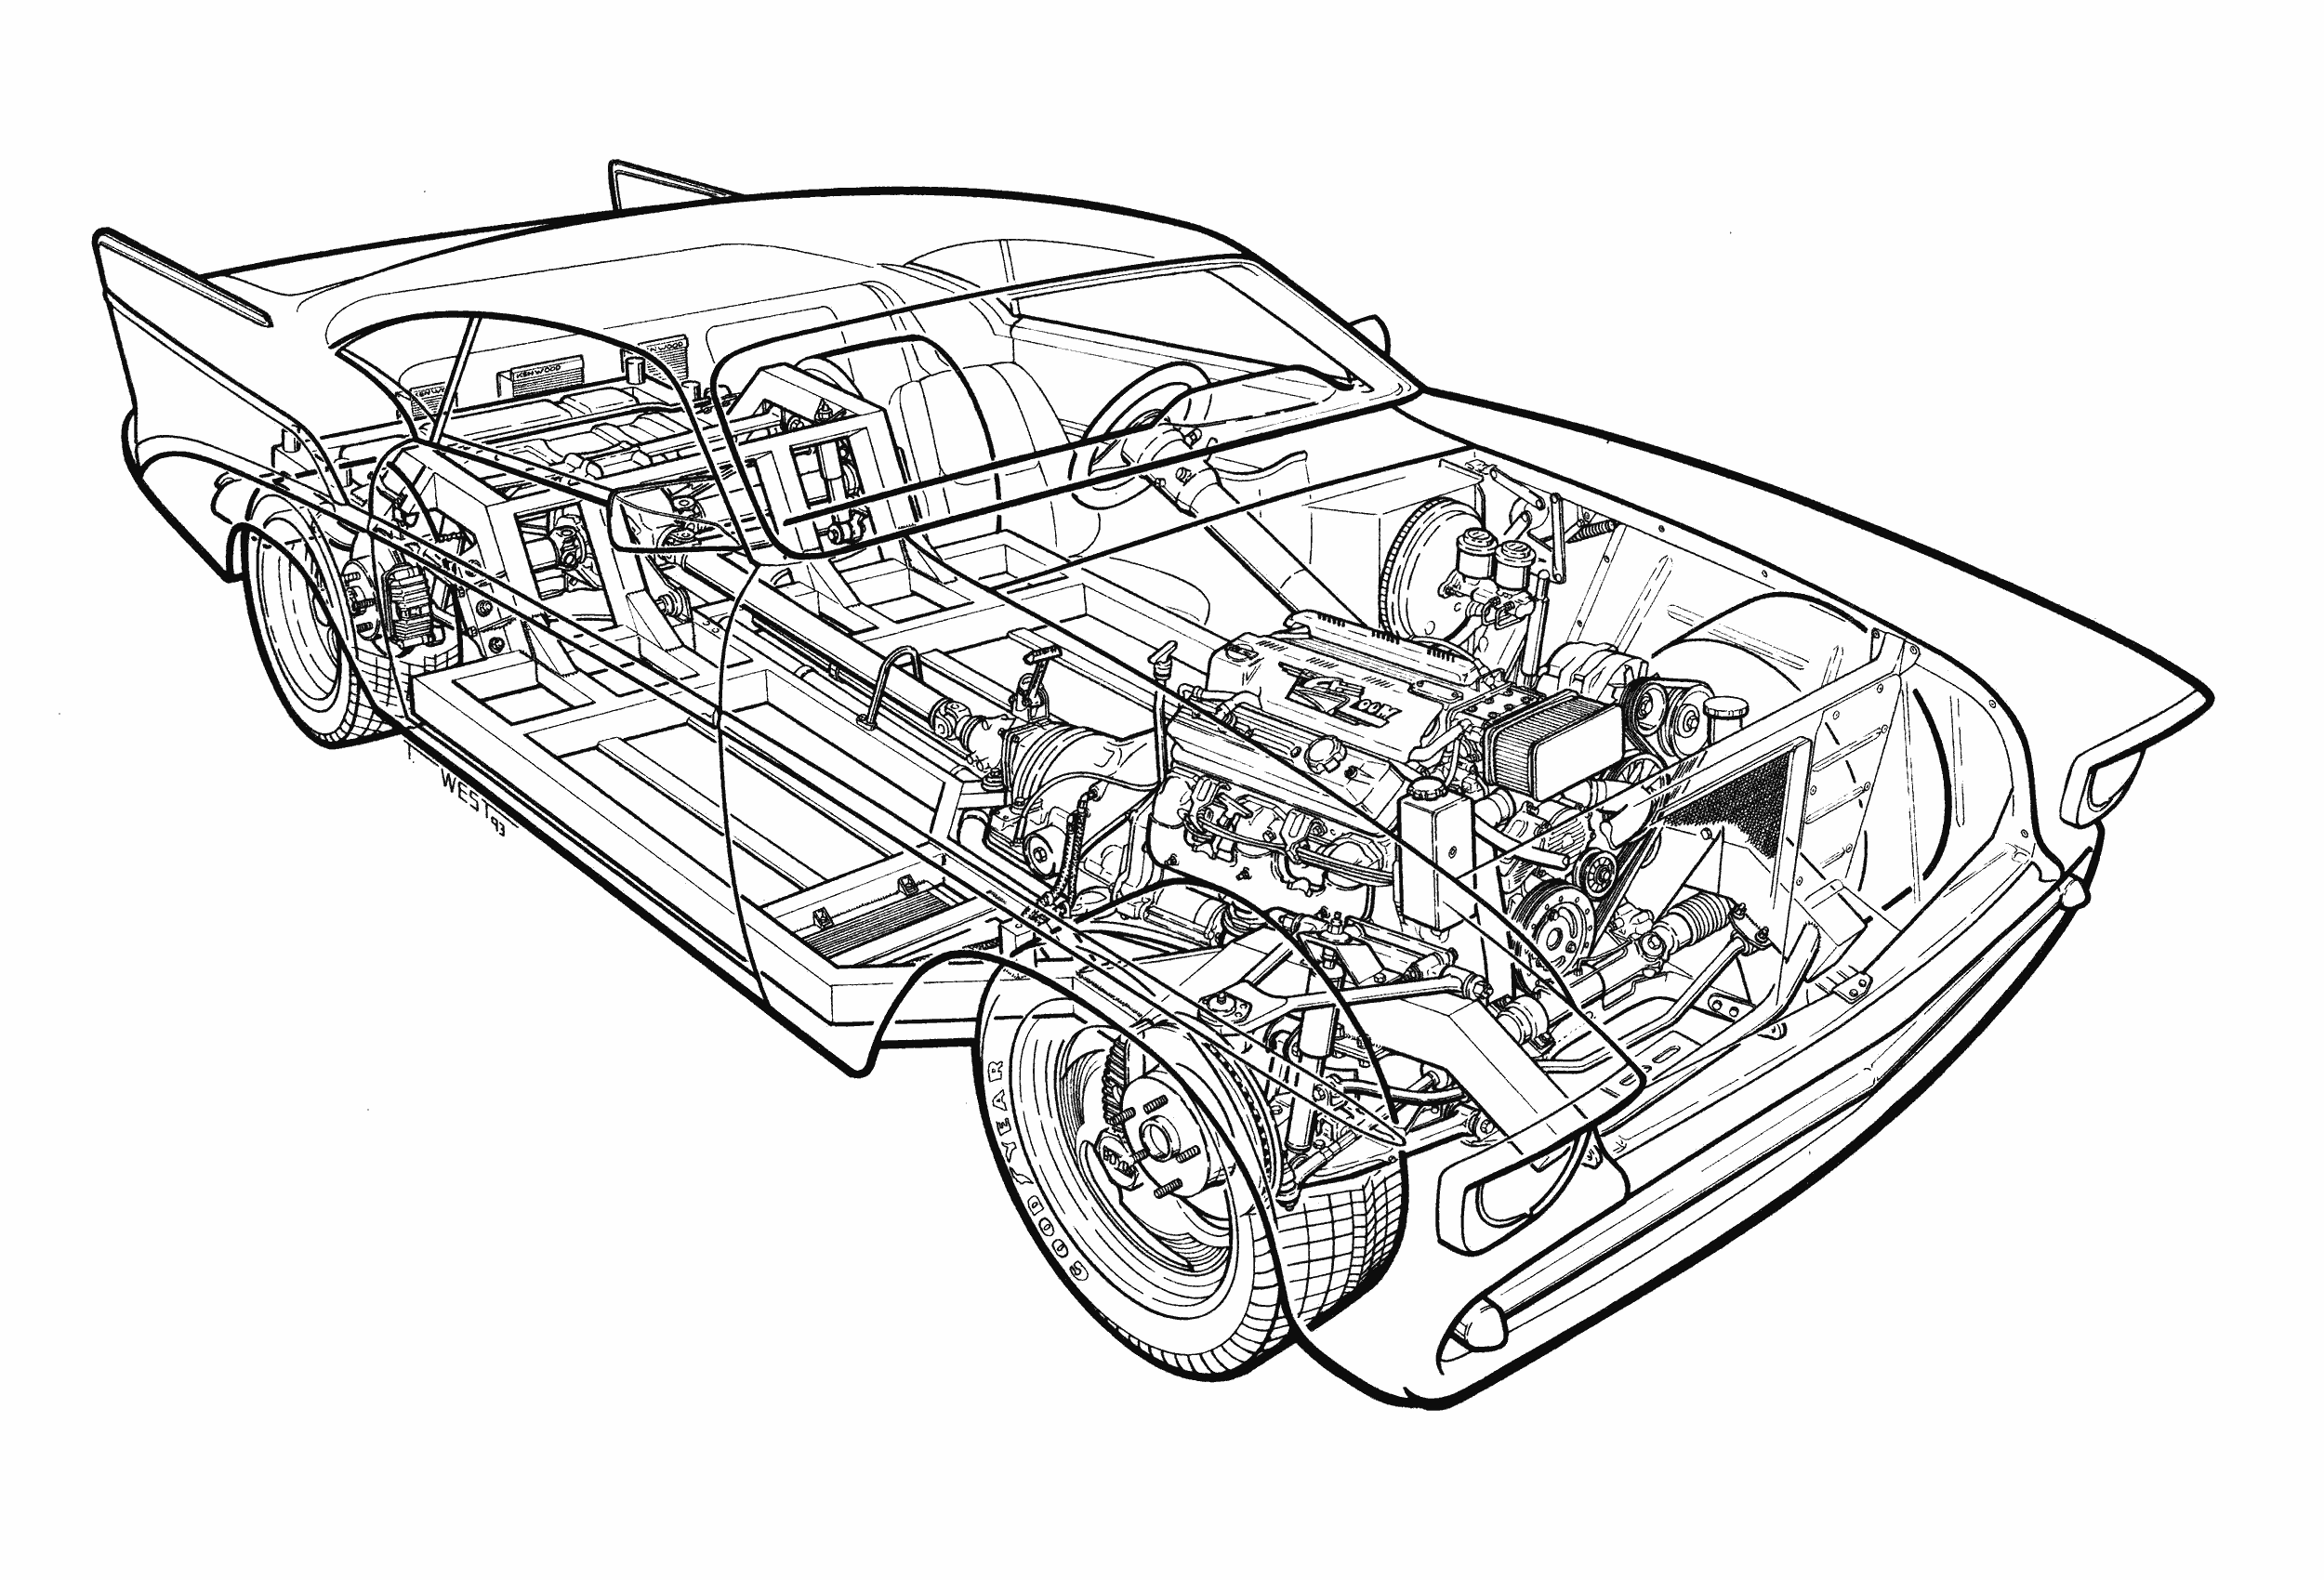 Chevrolet Bel Air cutaway drawing